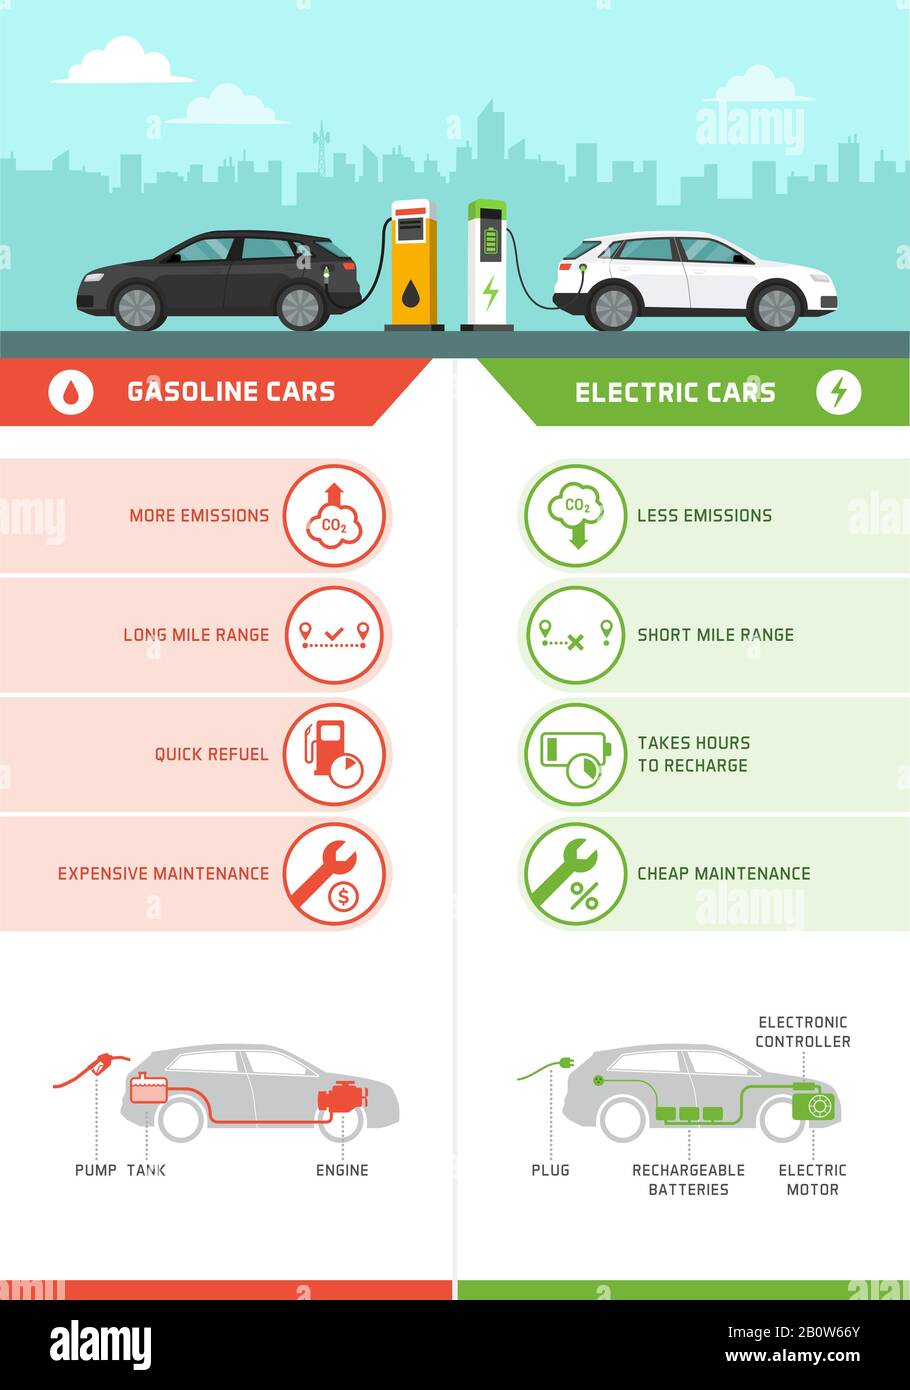 Gas vs. Electricity 2